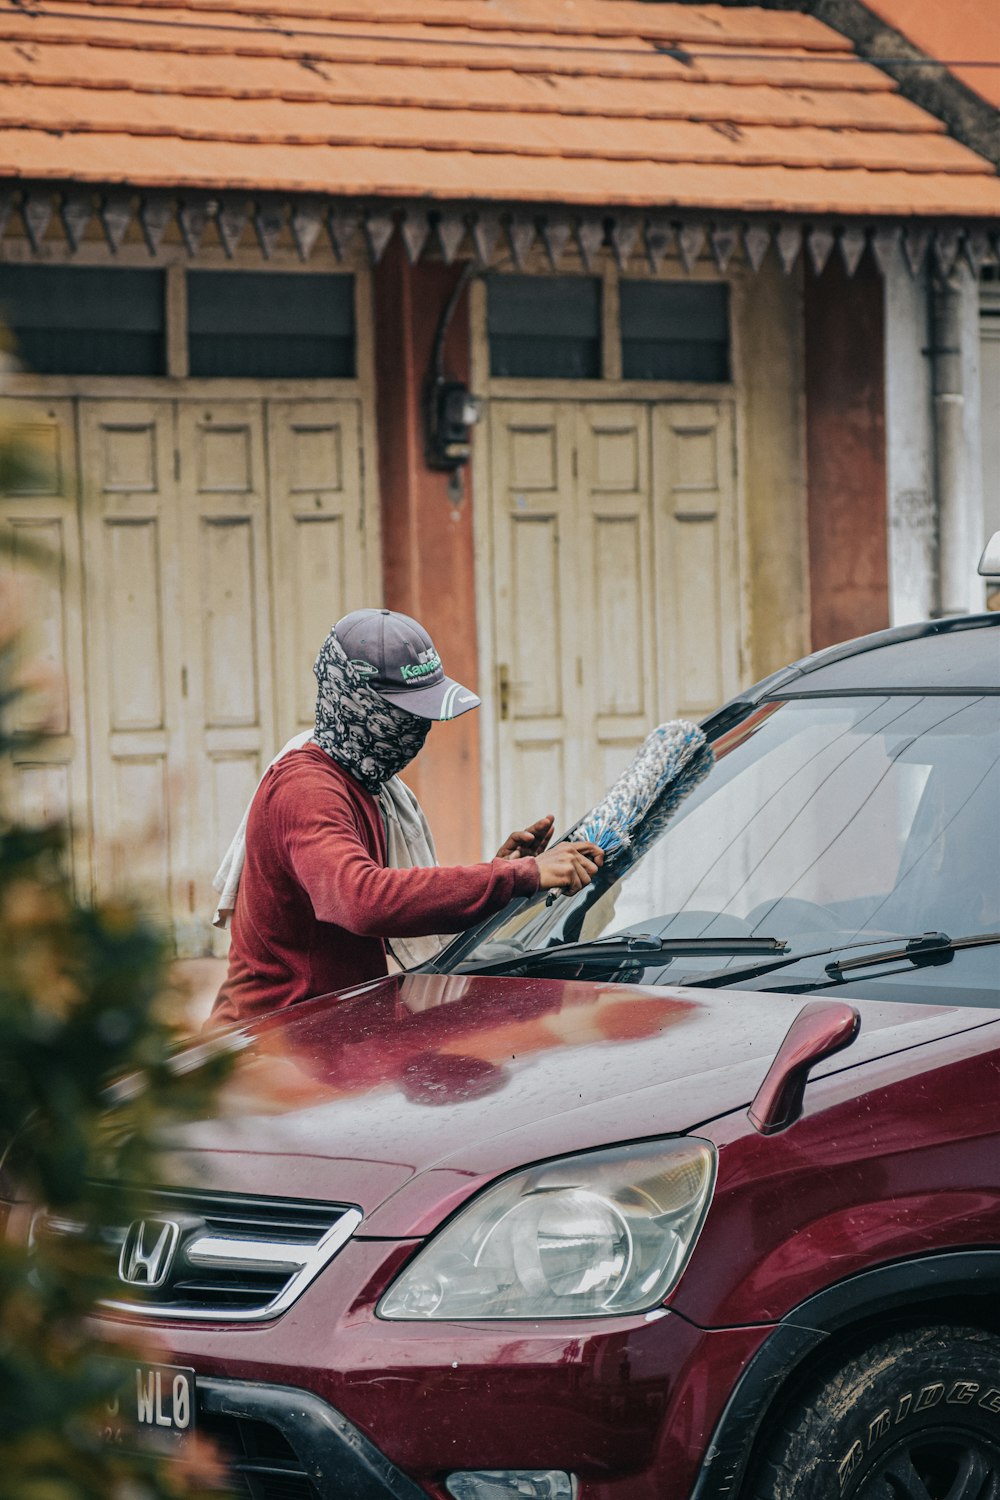 a man in a bandana waxing a car